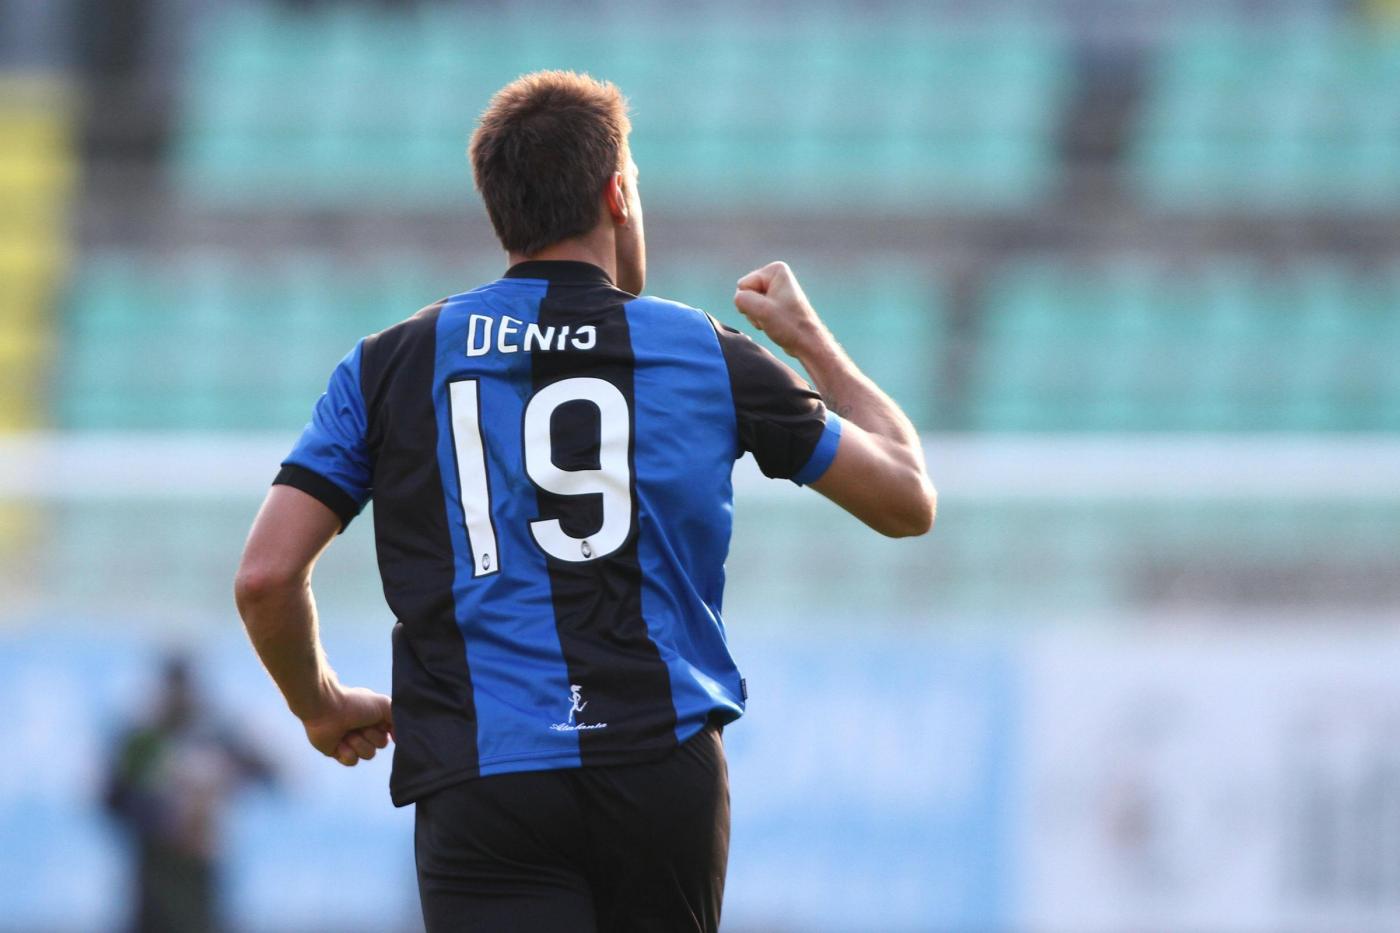 <!--:sv-->Marino släpper inte Denis: “Inter? Han kysste vår tröja”<!--:--><!--:en-->Marino won’t let go of Denis: “Inter? He kissed our jersey”<!--:-->